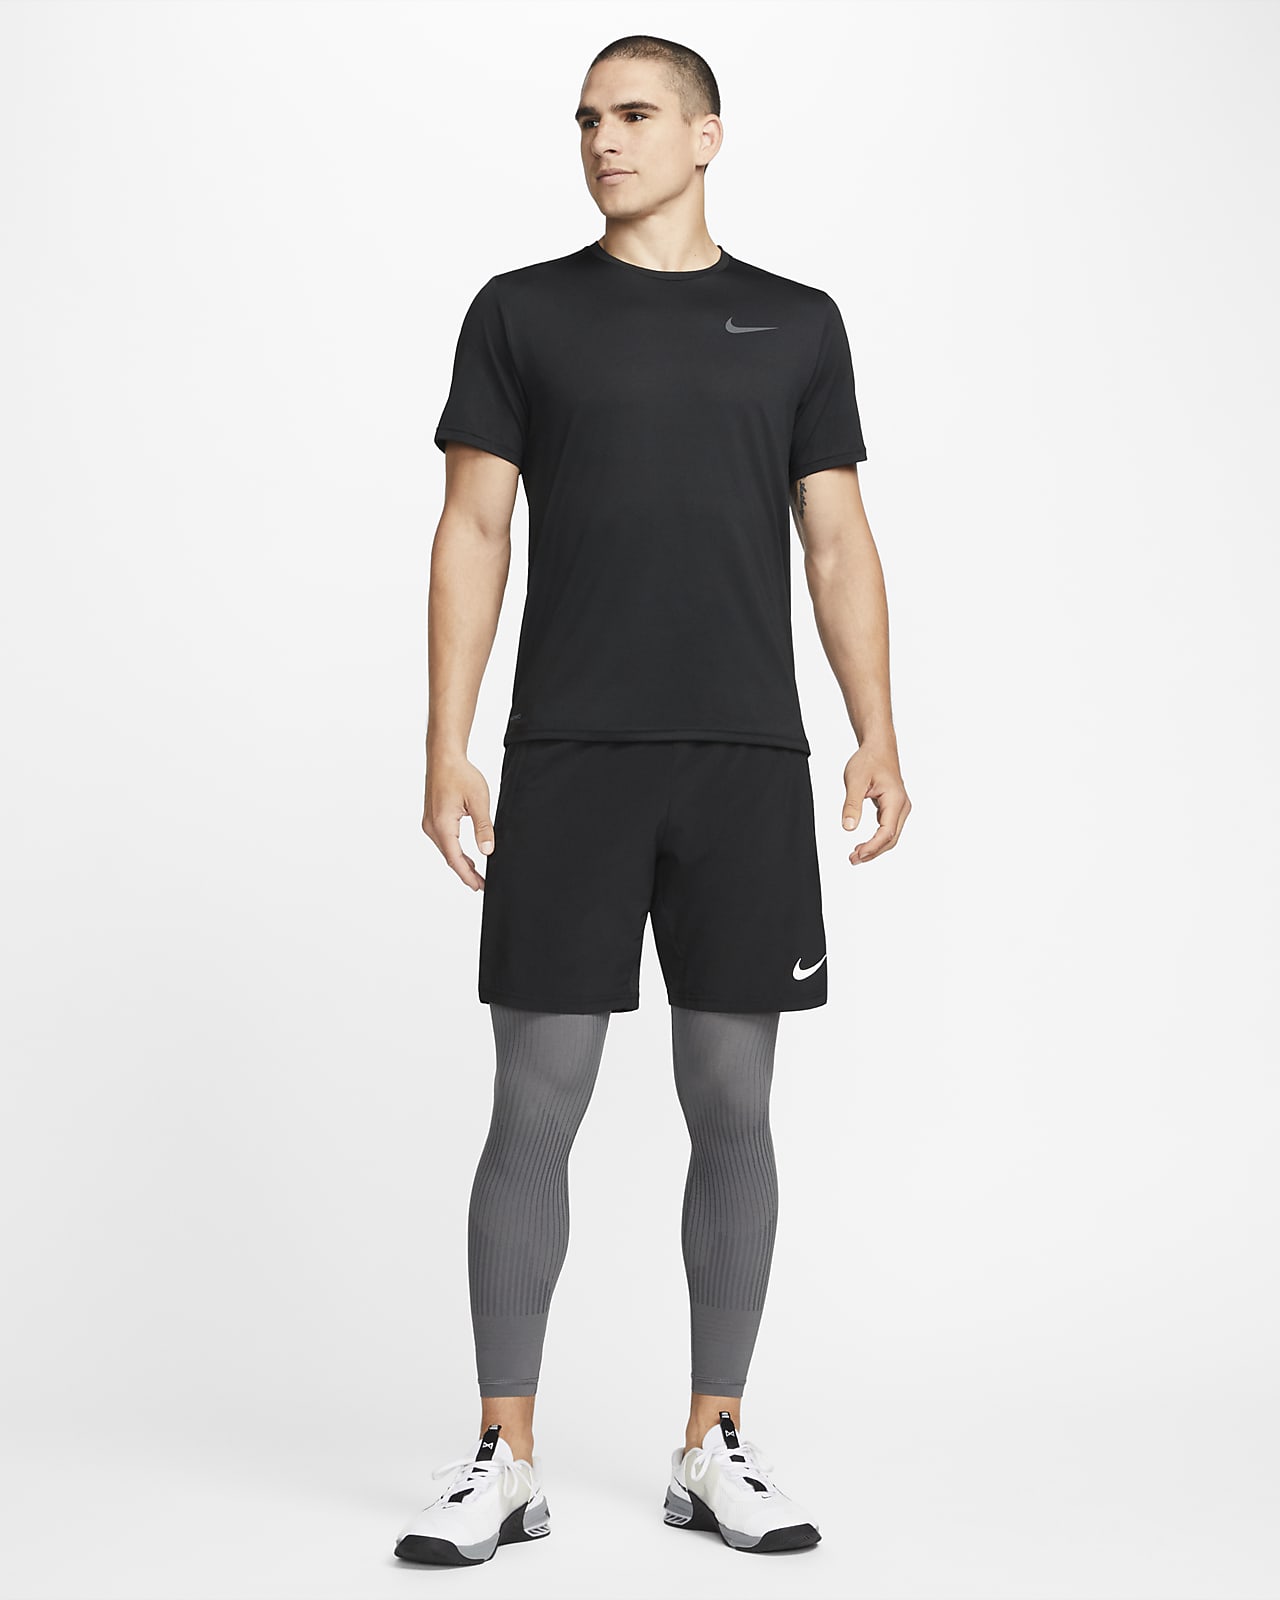 Nike Power Training Tights - MEDIUM- 890668-429 Pants Navy Black Mesh Lux  Pocket 